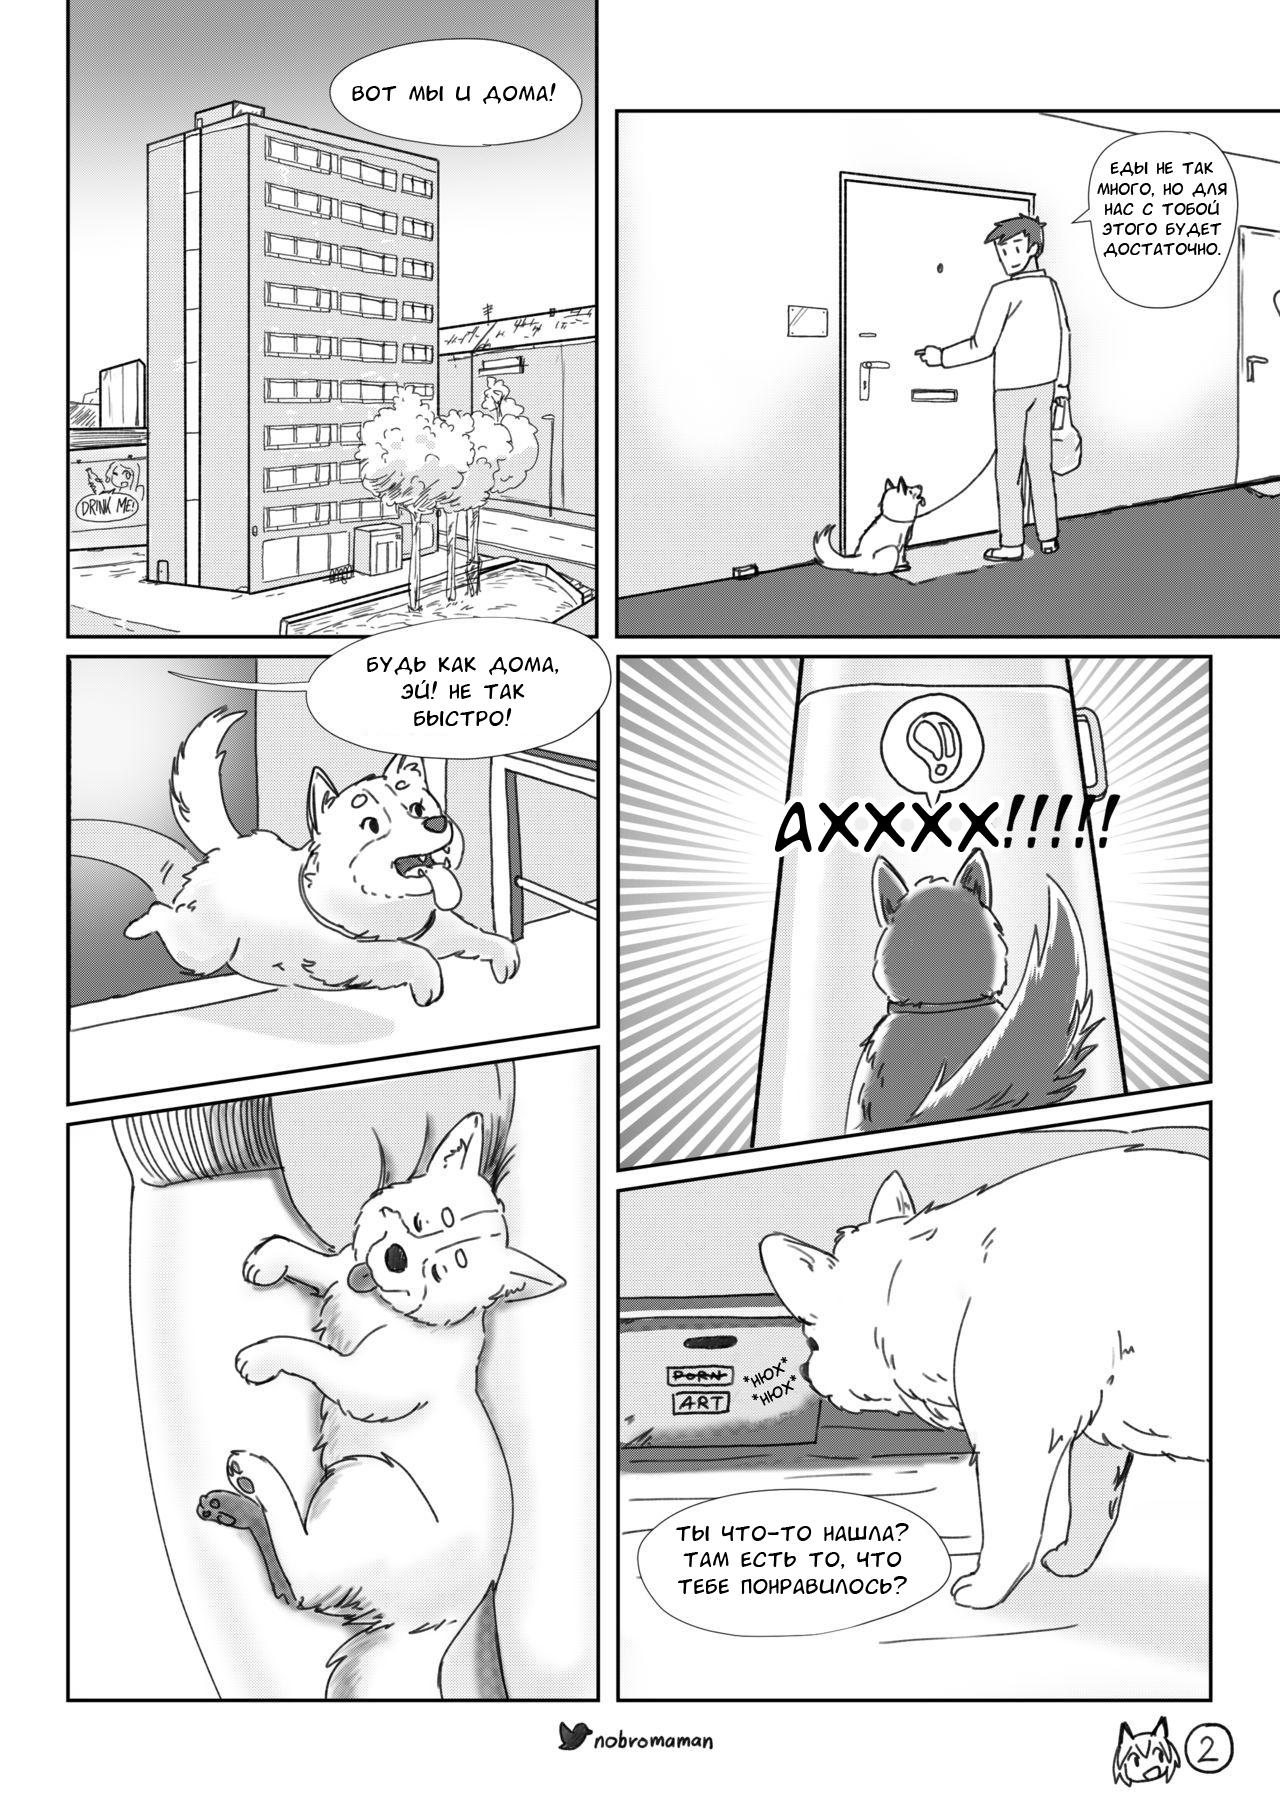 Dog Garl Xxx Com - Life with a dog girl - Chapter1 - Page 3 - Comic Porn XXX